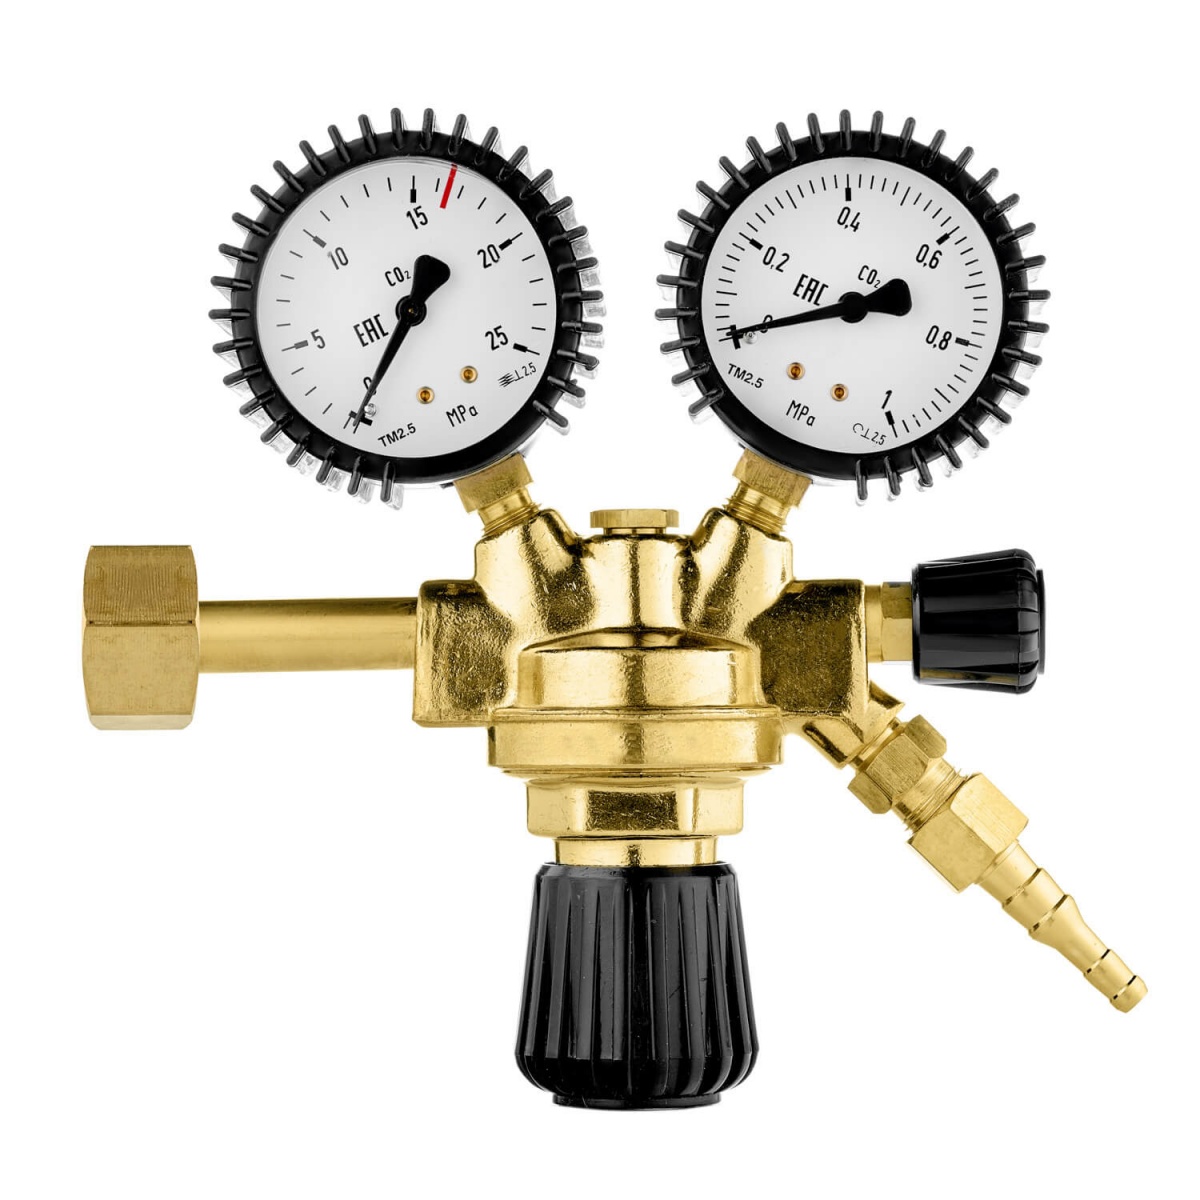 Регулятор расхода газа У30/АР40-КР-И регулятор давления газа dragonkit